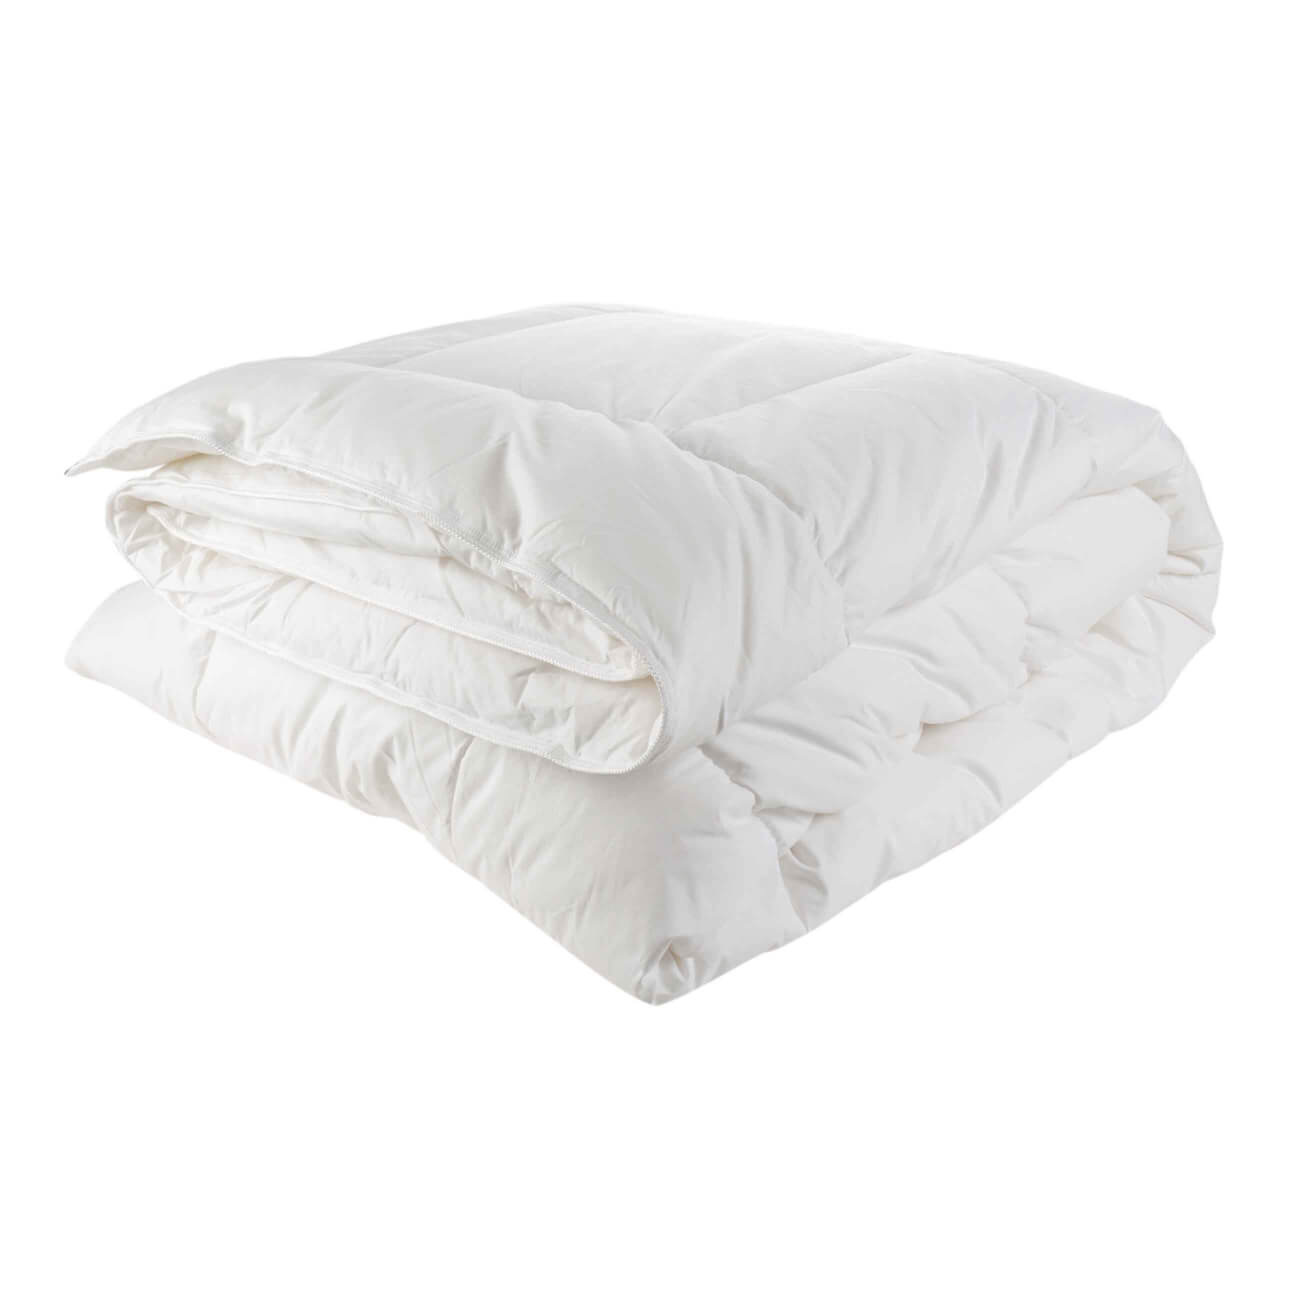 Одеяло, 200х220 см, хлопок/микрофибра, Soft cotton одеяло 200х220 см микрофибра super soft